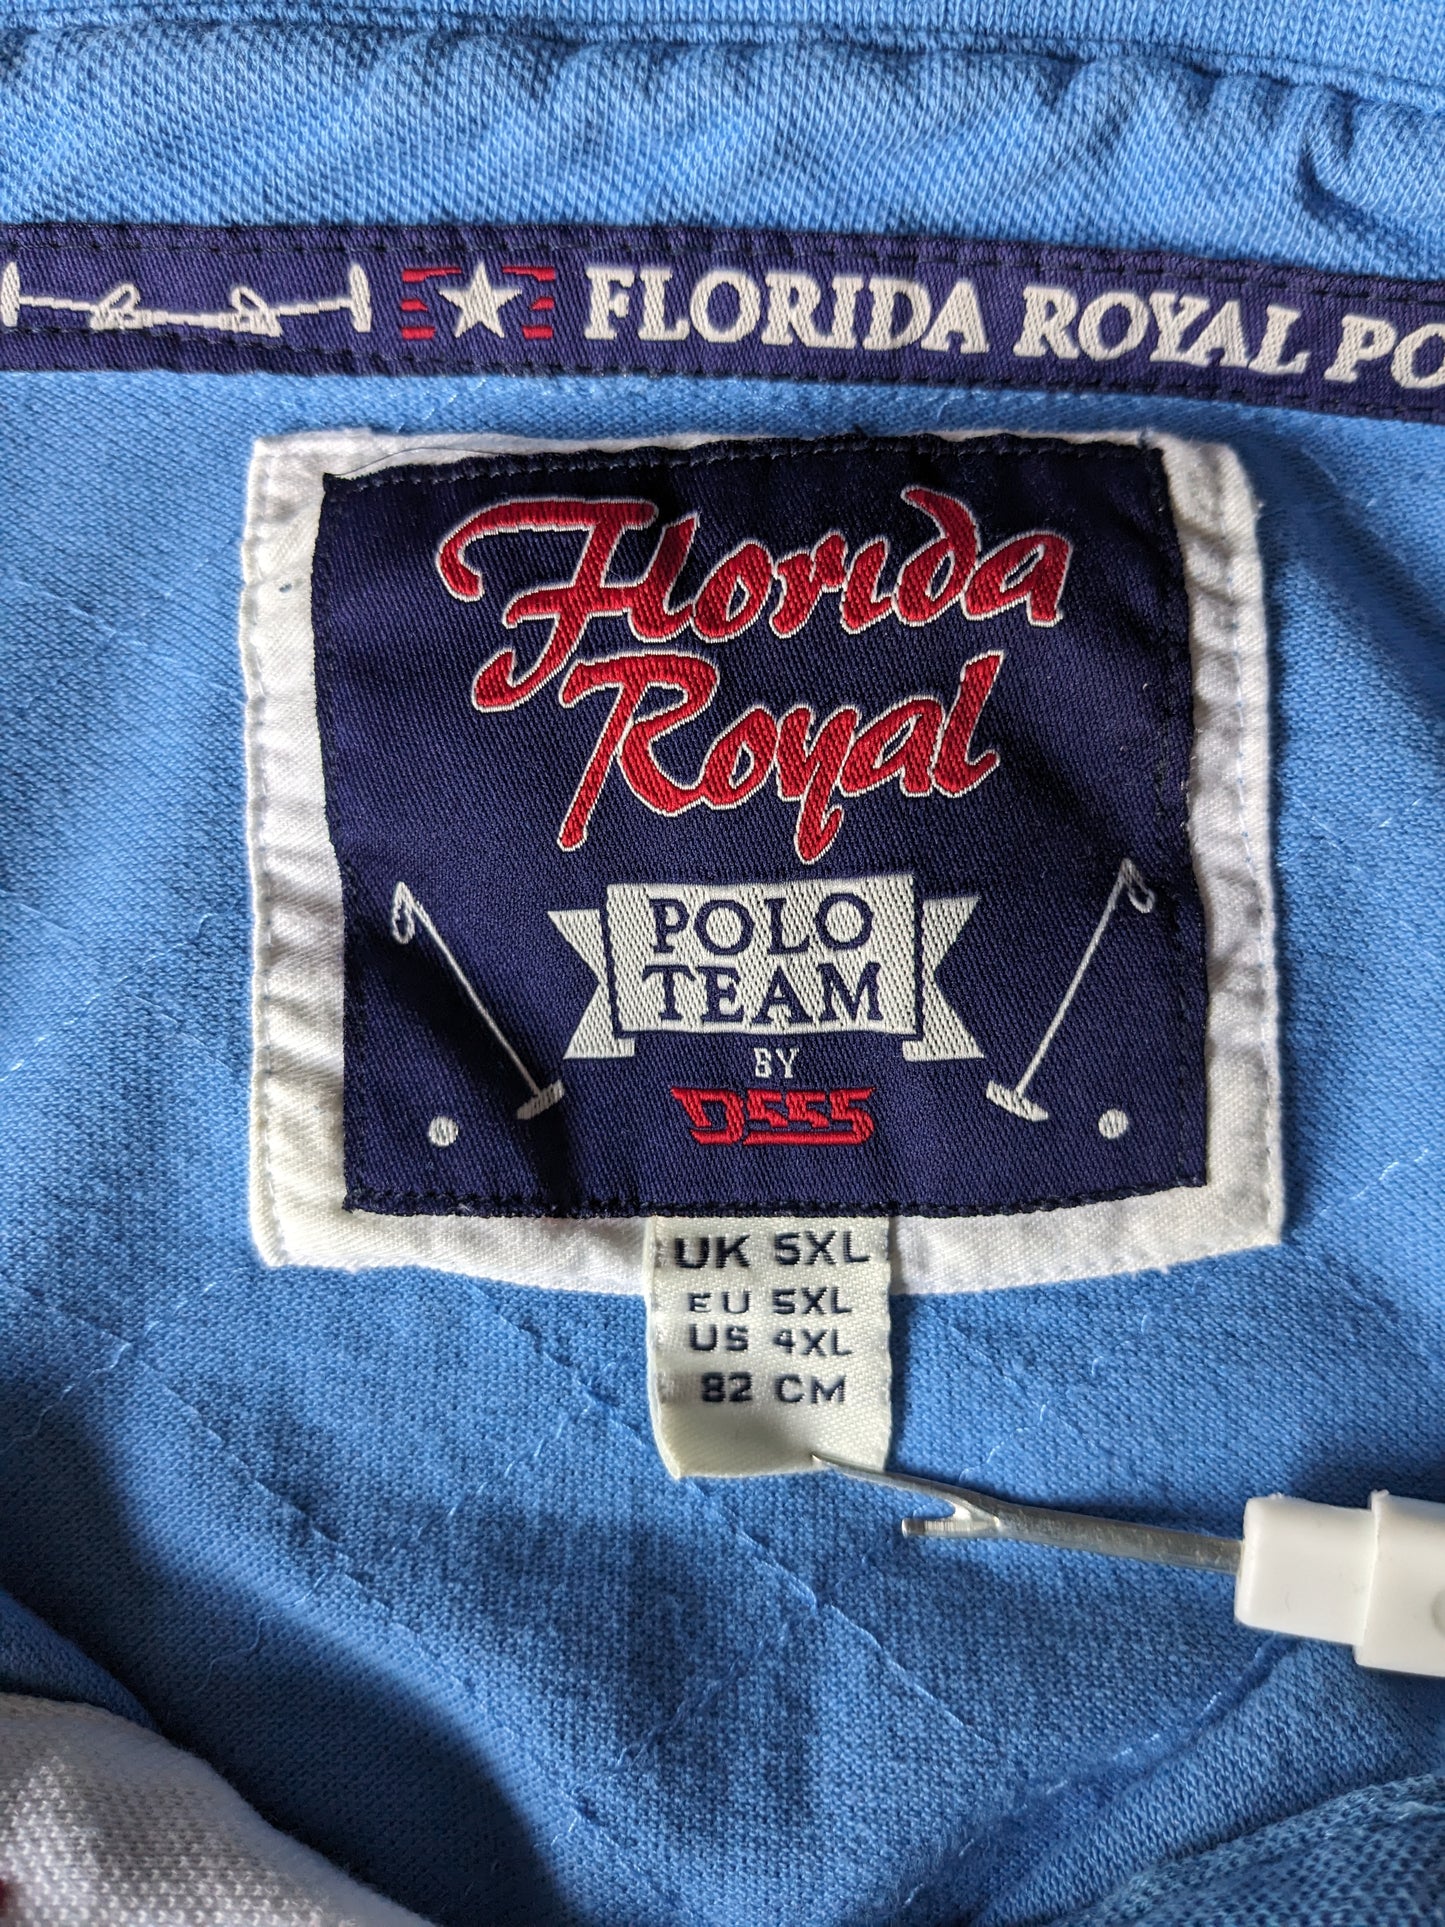 Florida Royal Polo. Bleu avec des applications brodées. Taille 5xl / xxxxxl.